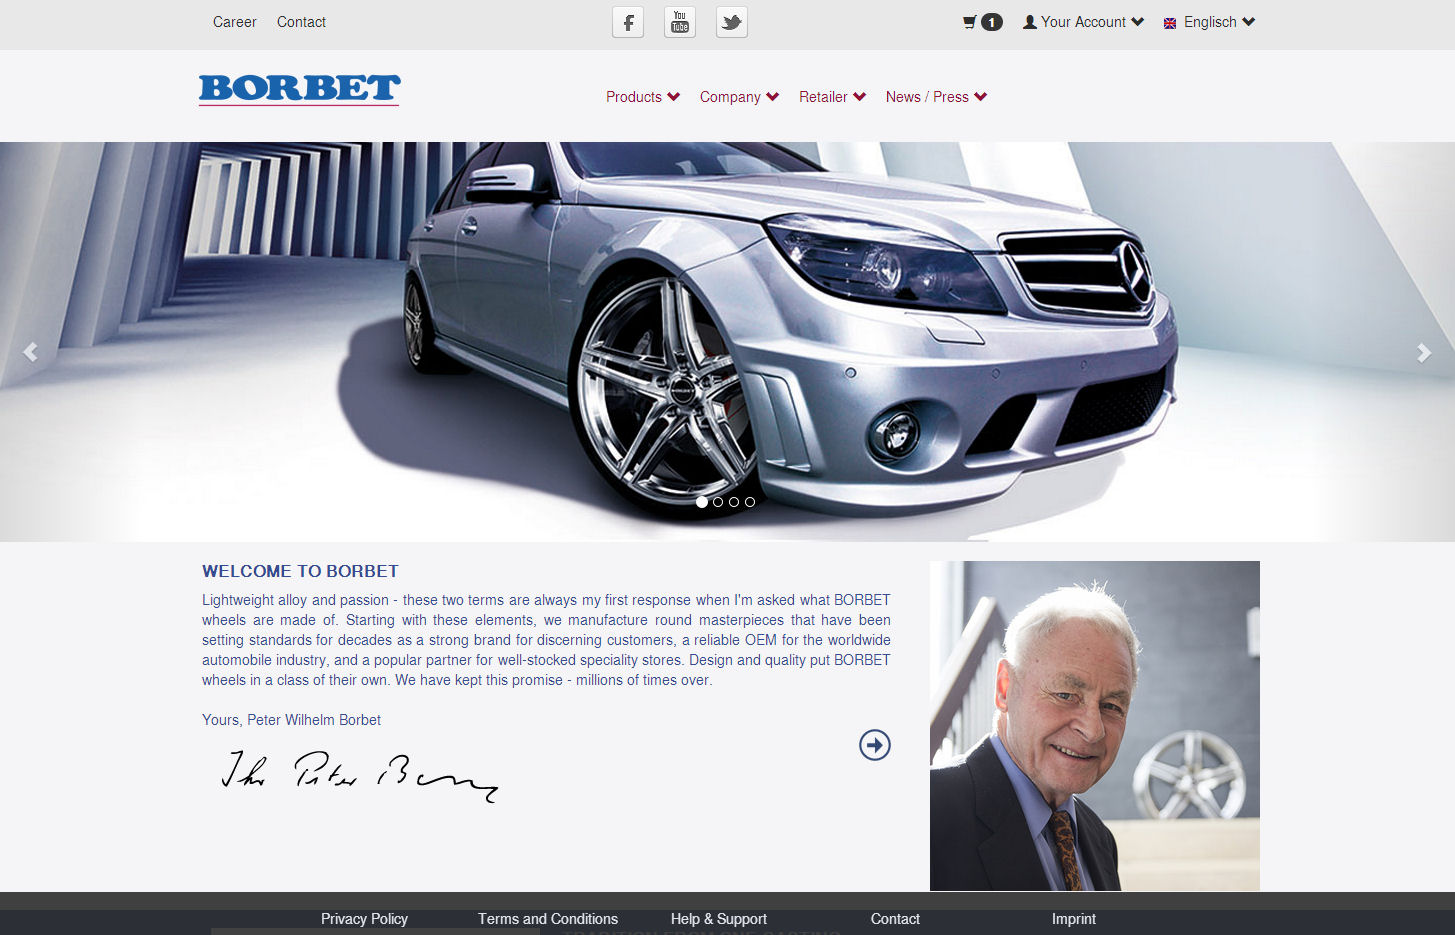 Borbet unveils new online presence